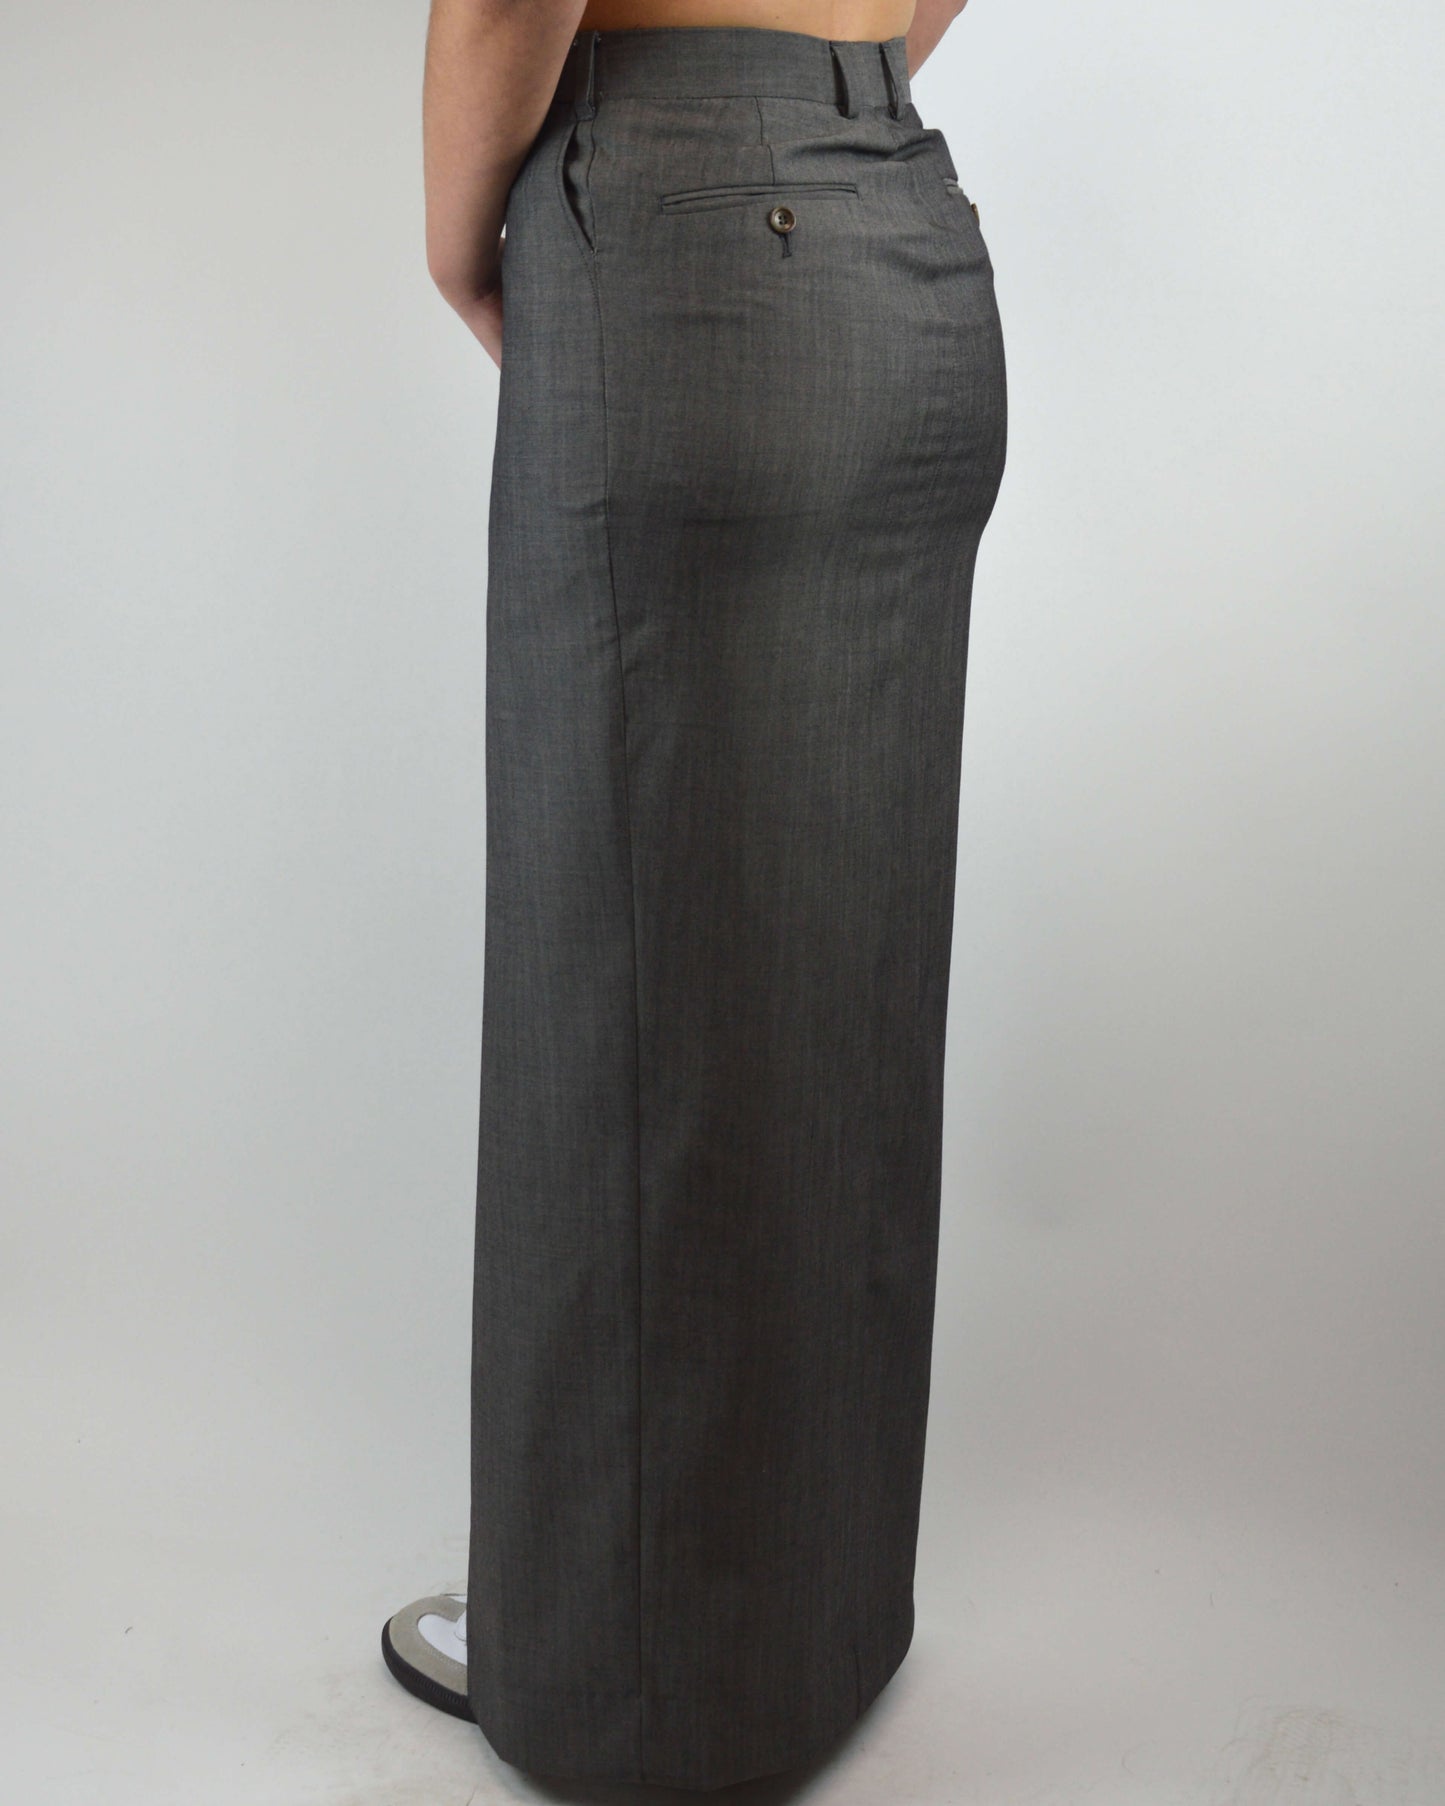 Skirt Suit - Light Grey (XS/S)